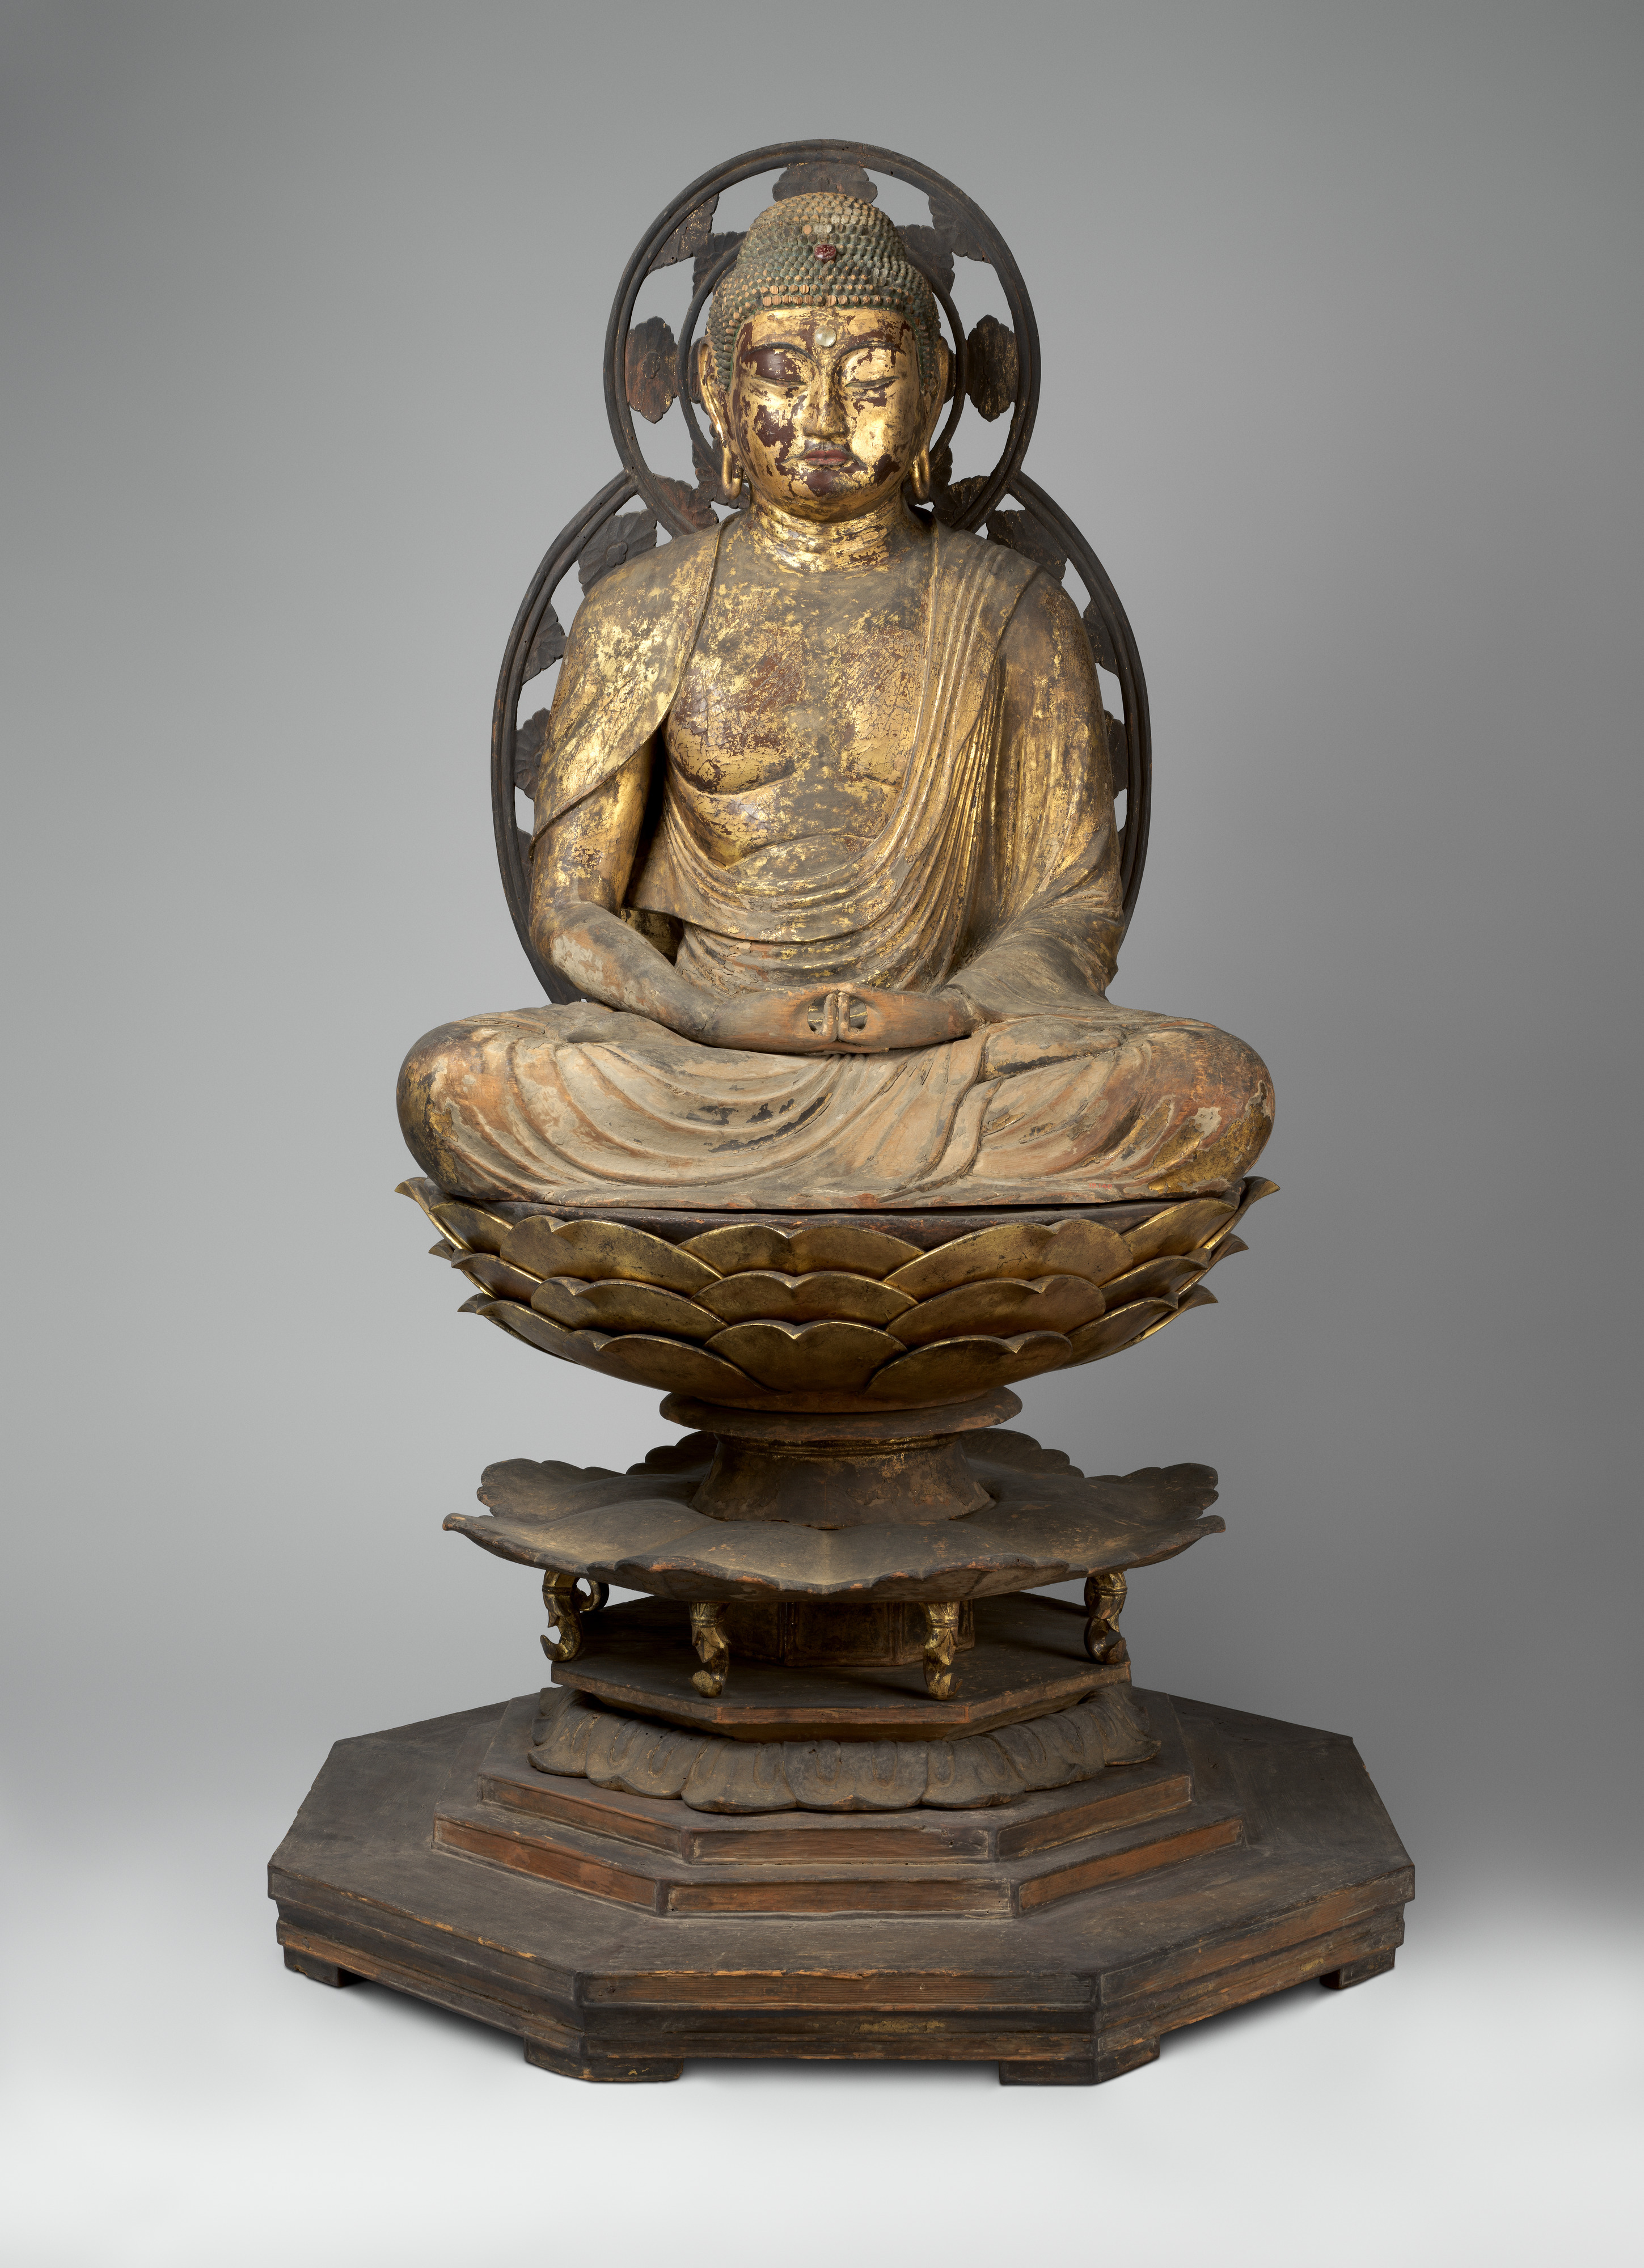 Amida nyorai Amitabha Tathagata Japanese Buddha statue Takaoka Japan 